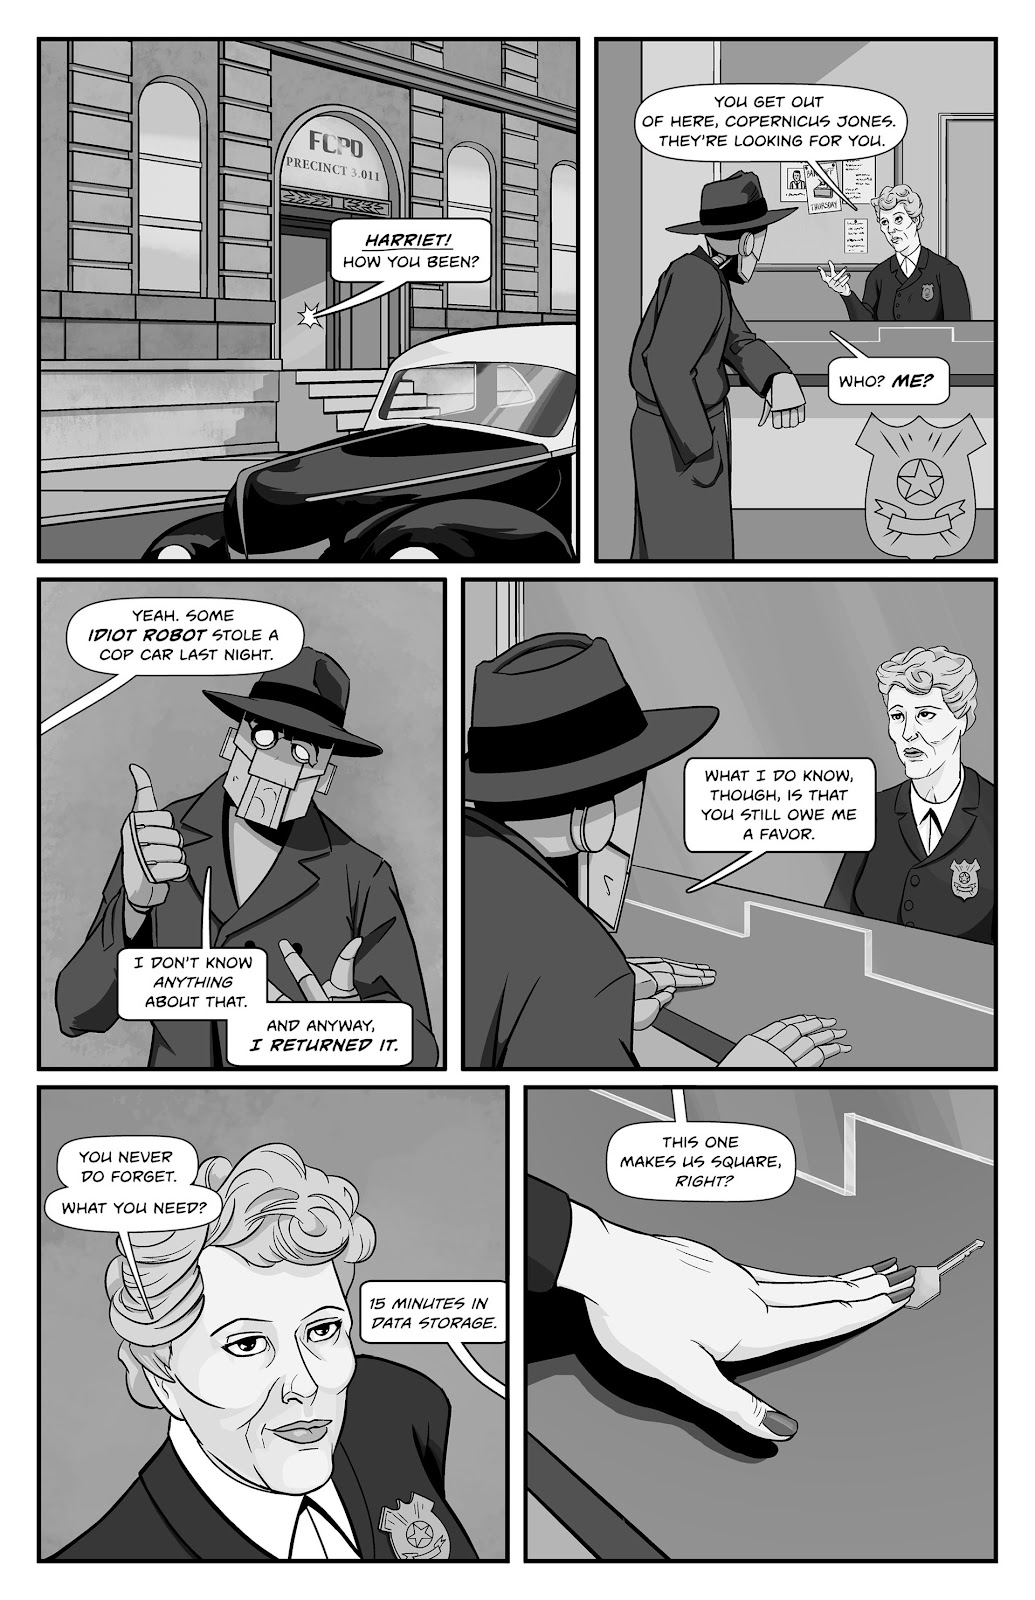 Copernicus Jones: Robot Detective issue 3 - Page 4